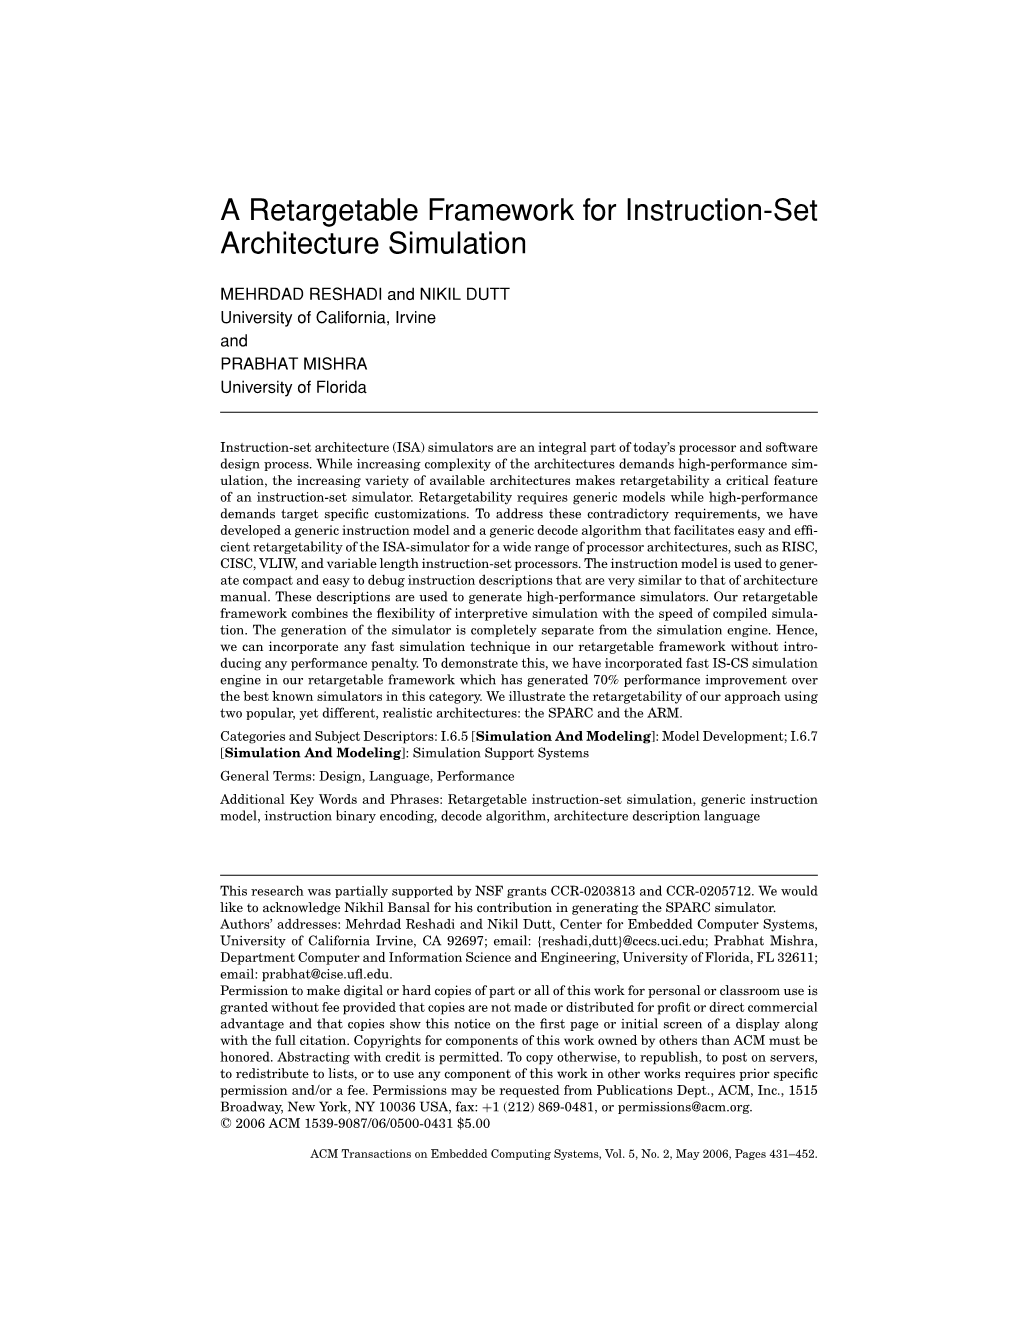 A Retargetable Framework for Instruction-Set Architecture Simulation